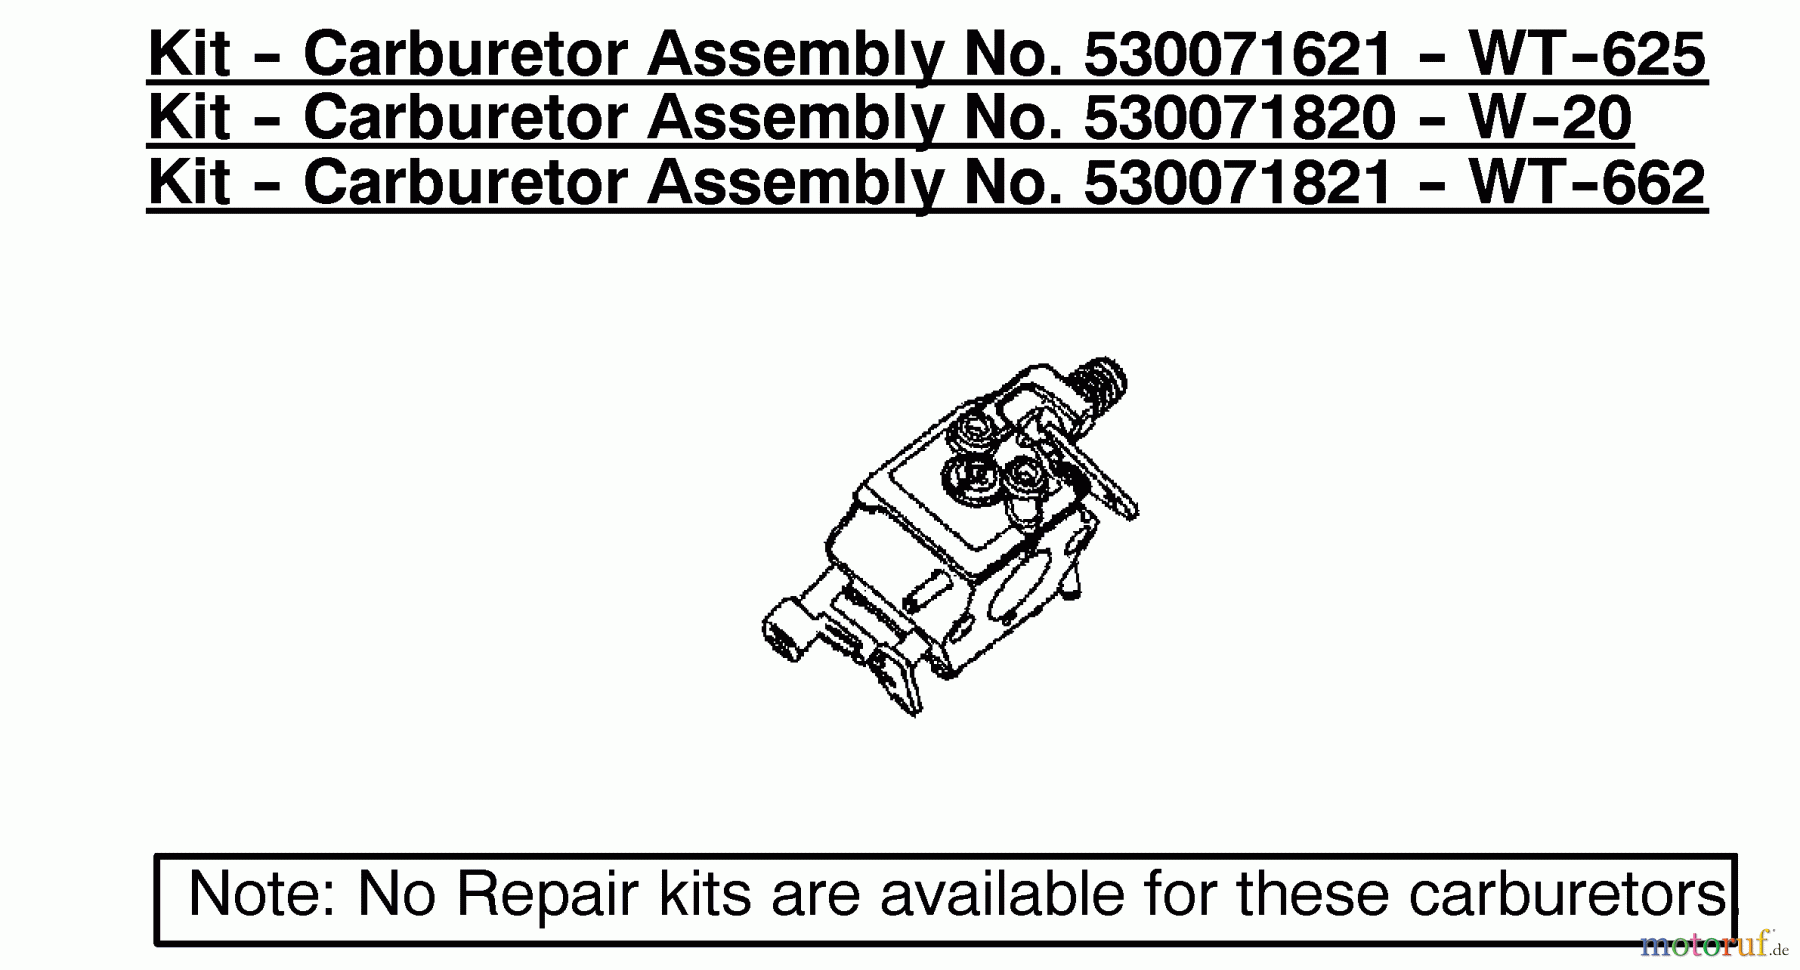  Poulan / Weed Eater Motorsägen 2450 (Type 5) - Poulan Woodmaster Chainsaw Kit - Carburetor Assembly 530071621/530071820/530071821